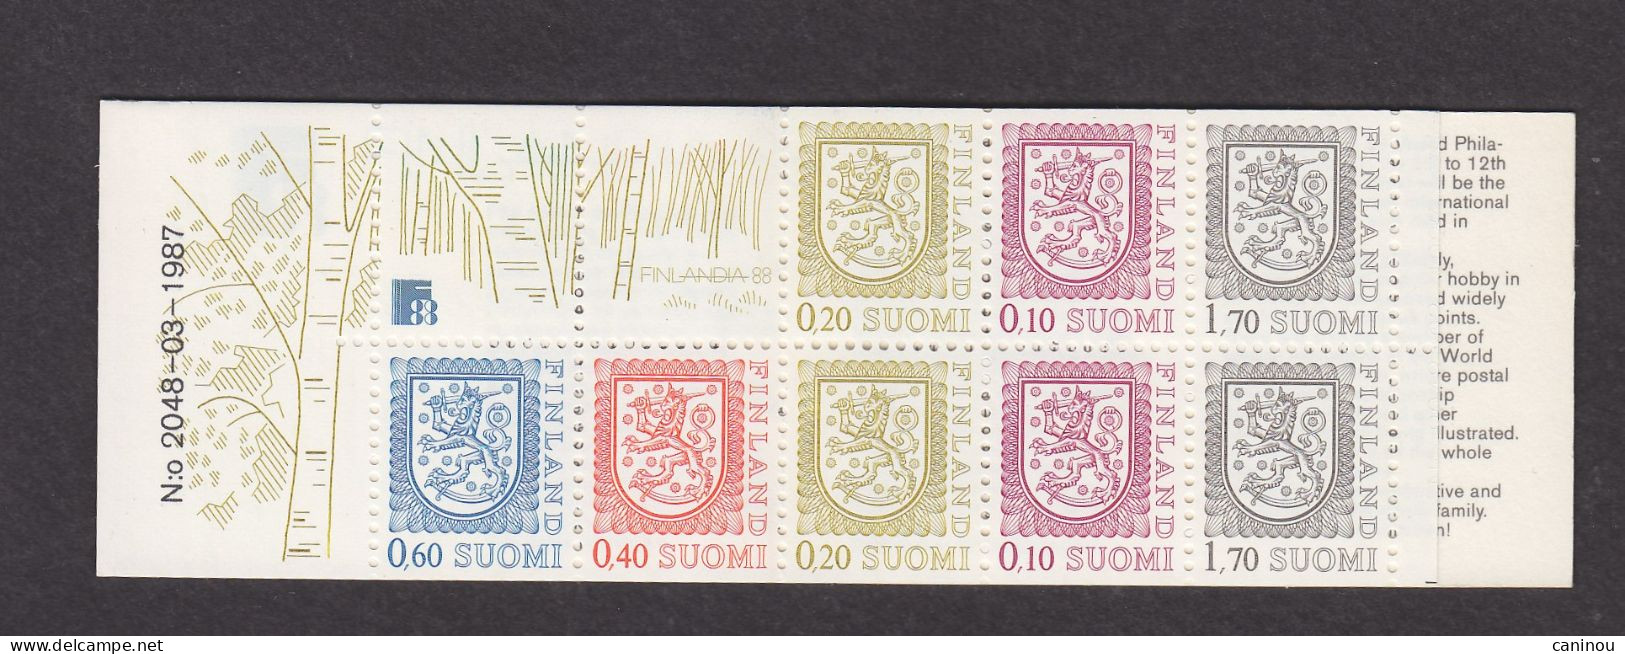 FINLANDE CARNET  Y & T C972a  FINLANDIA 88 1987 NEUF - Postzegelboekjes